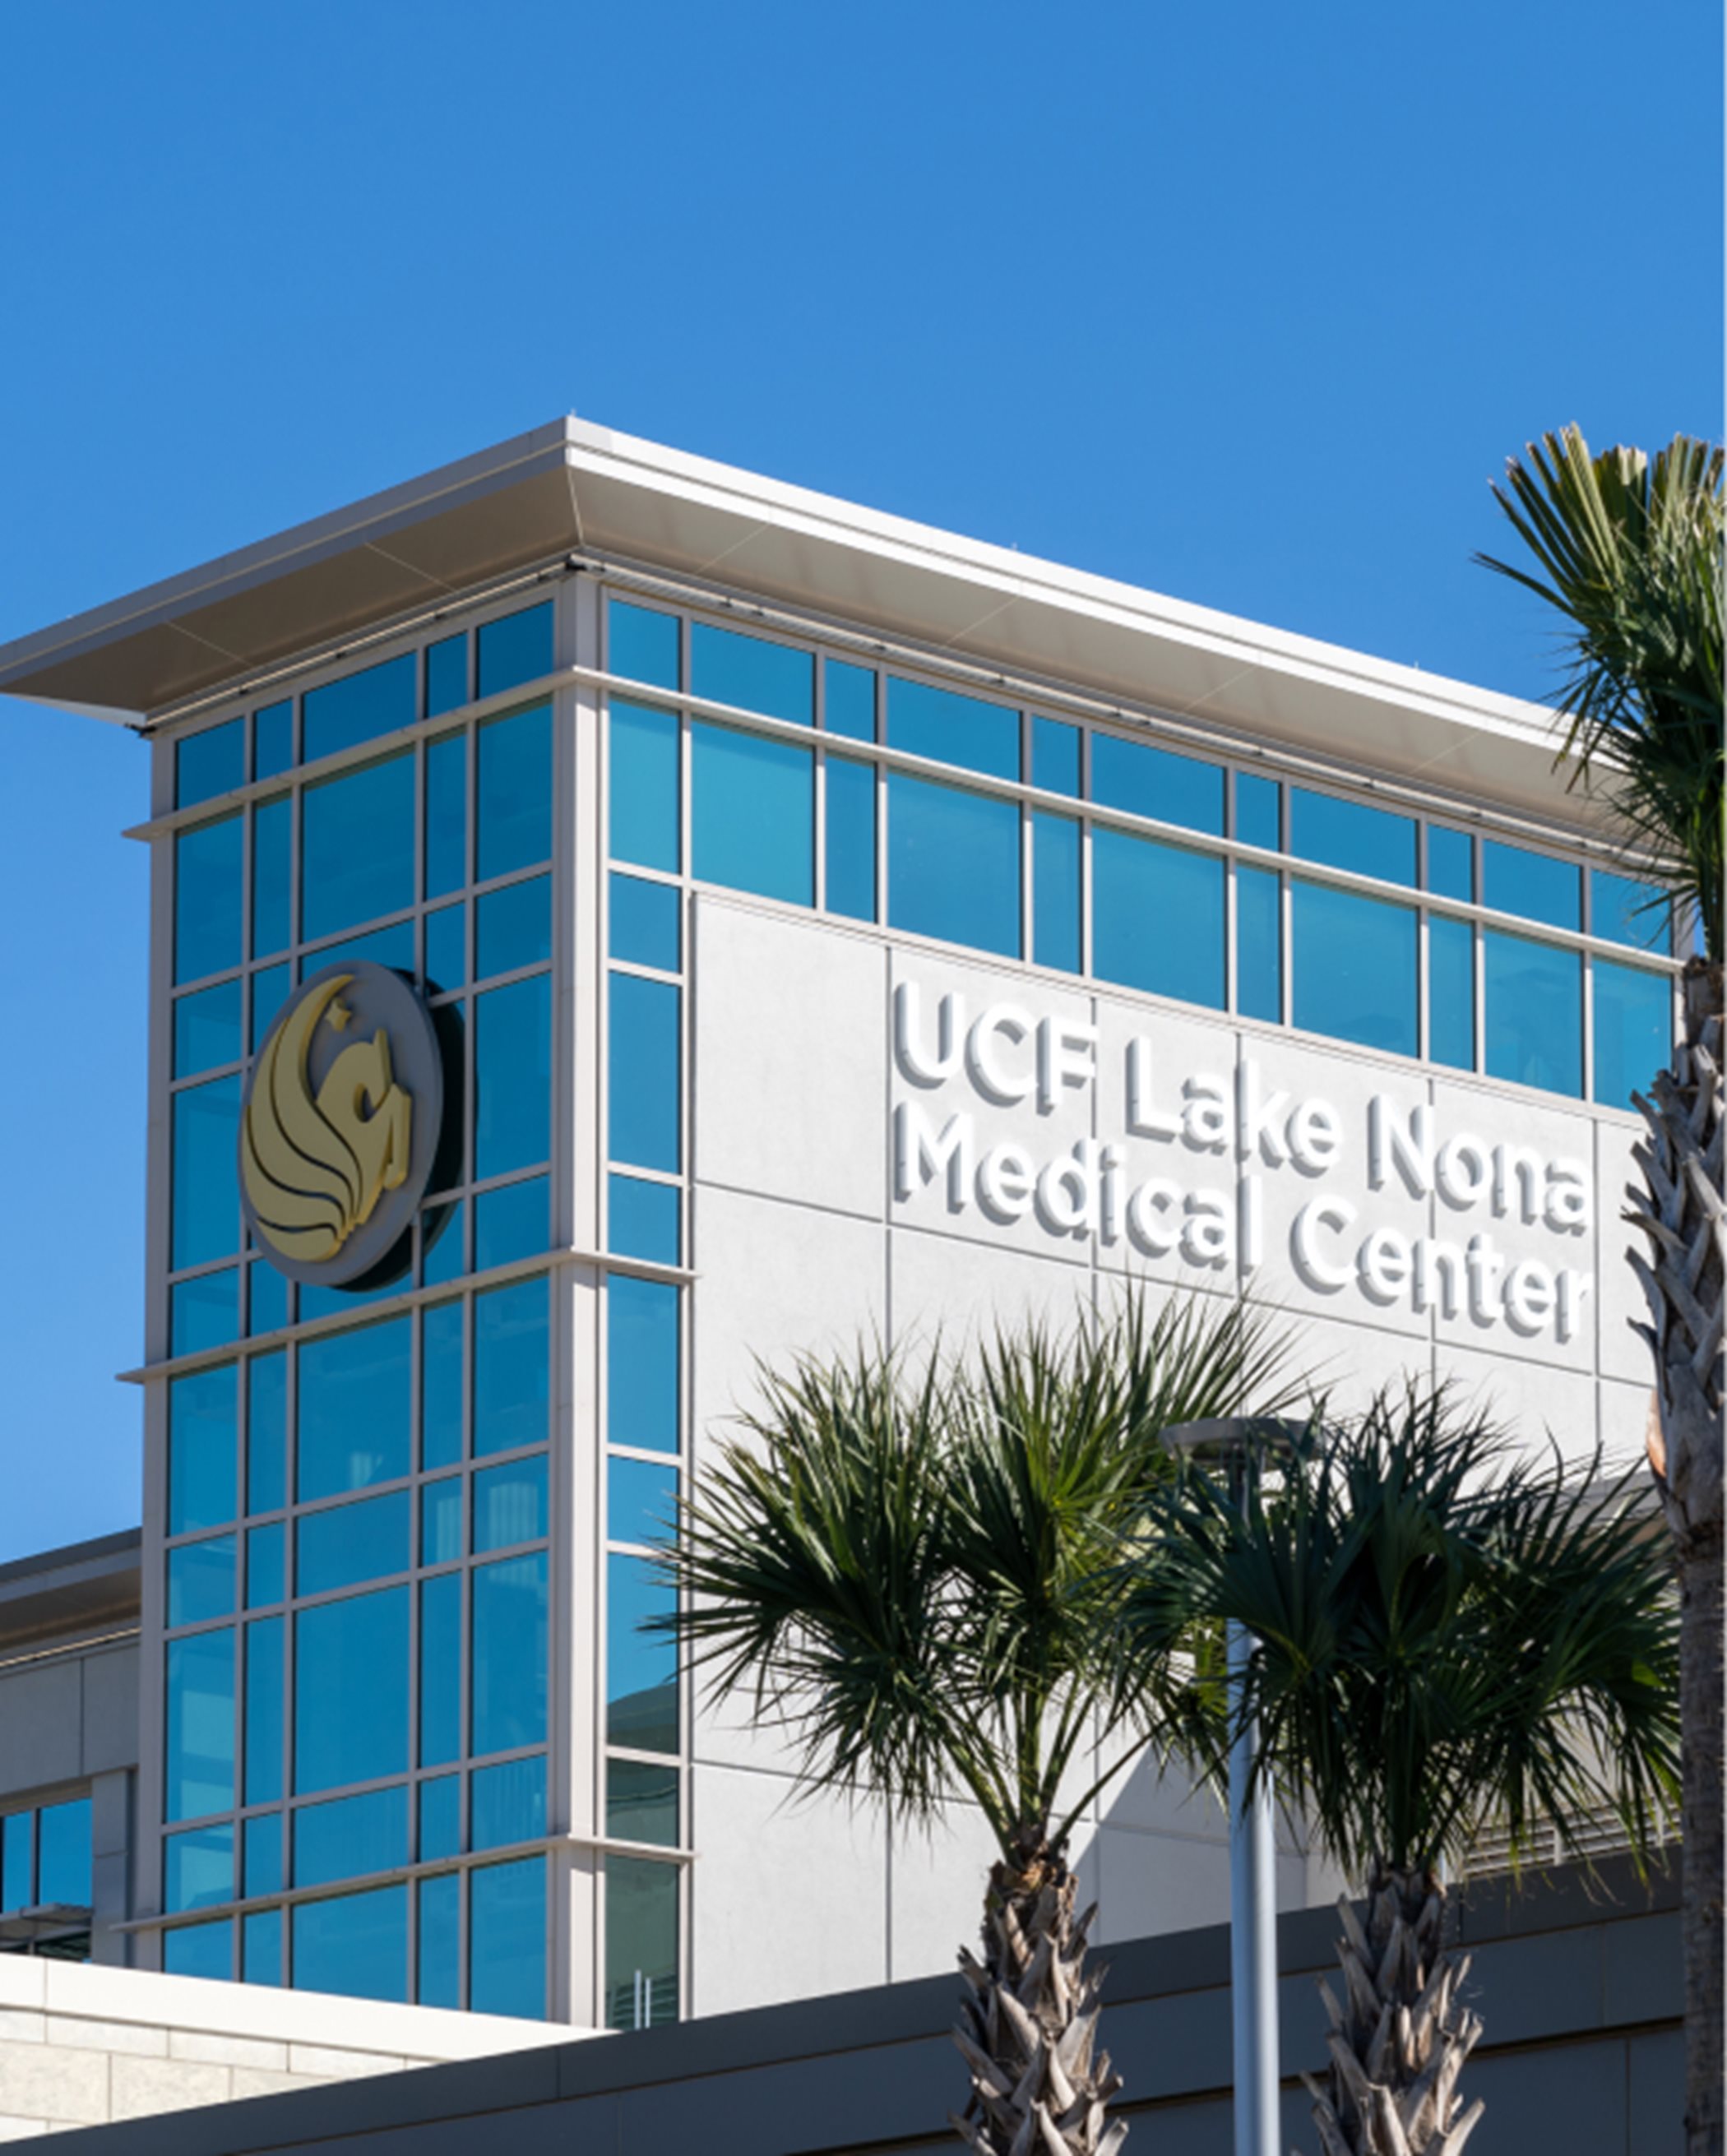 UCF Lake Nona Medical Center